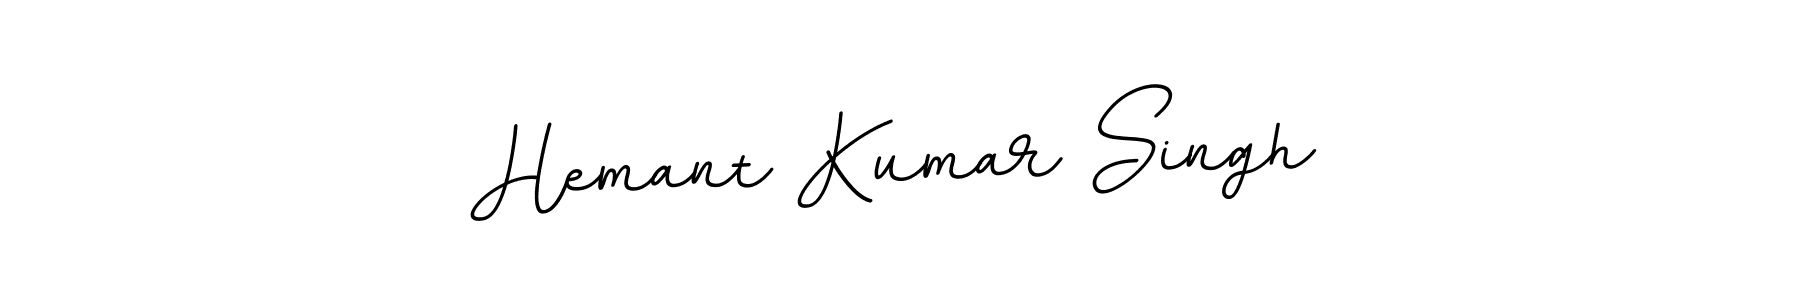 How to Draw Hemant Kumar Singh signature style? BallpointsItalic-DORy9 is a latest design signature styles for name Hemant Kumar Singh. Hemant Kumar Singh signature style 11 images and pictures png